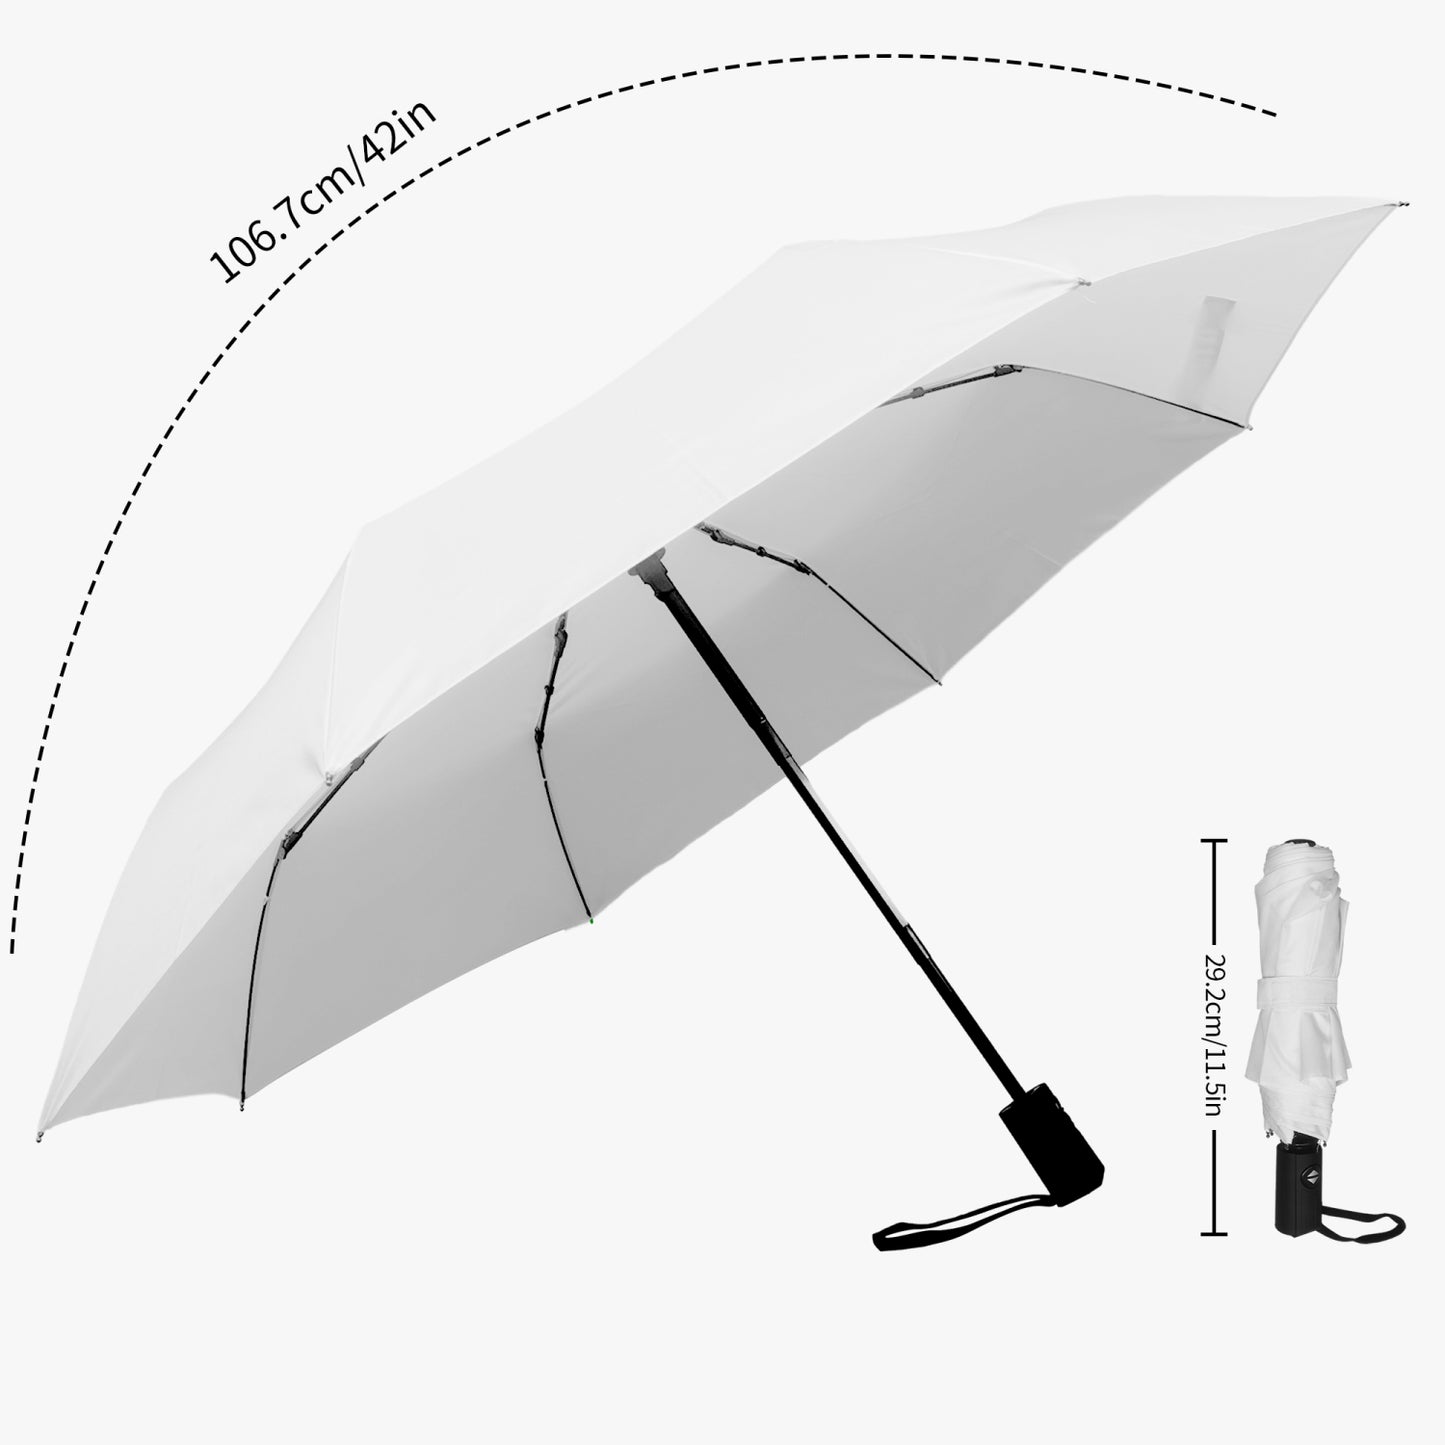 FORMULA FORD Official Automatic Folding Umbrella - Large size